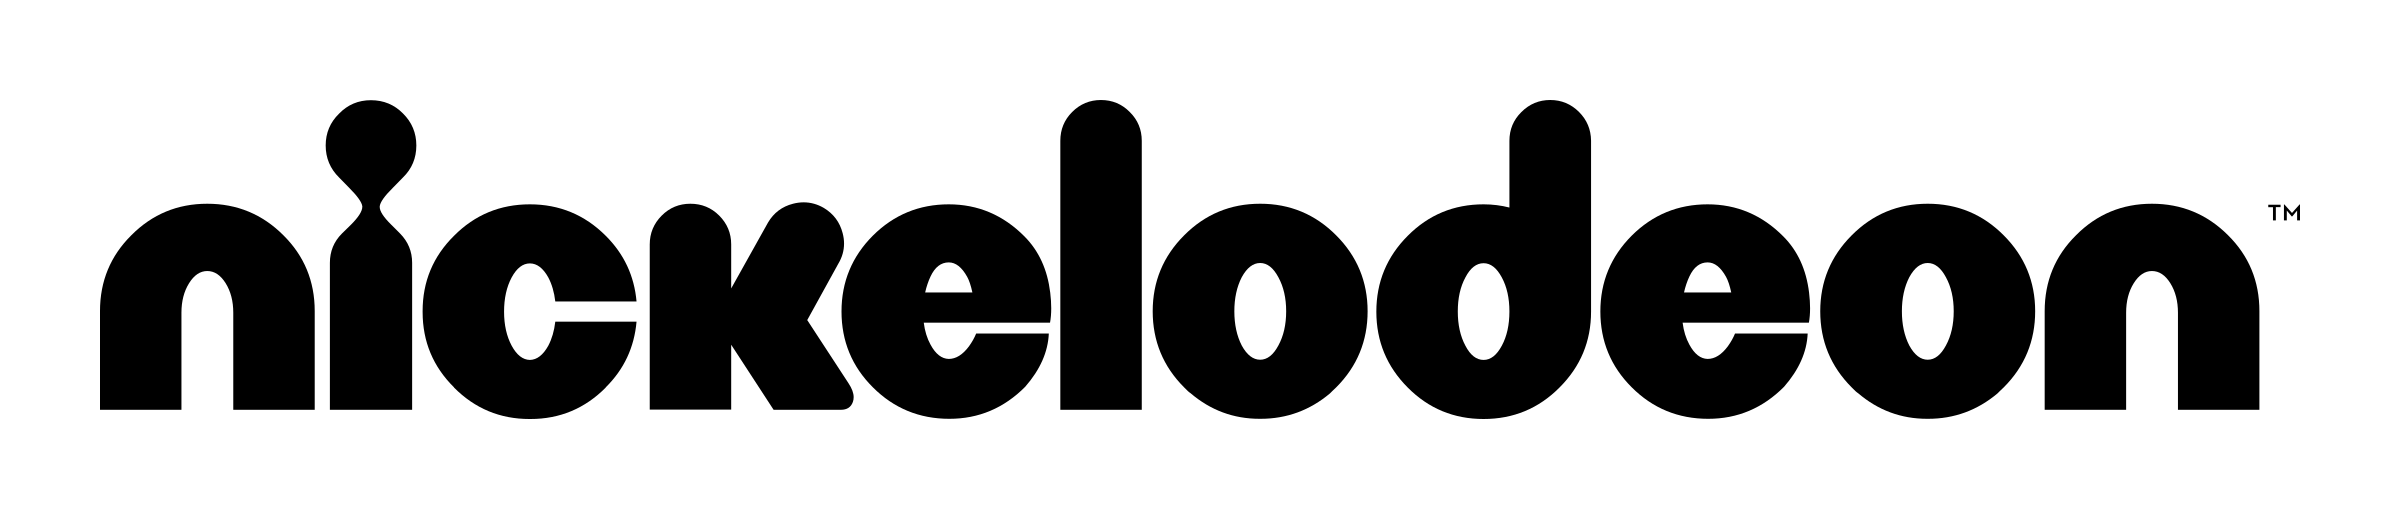 nickelodeon-logo-black-and-white.png